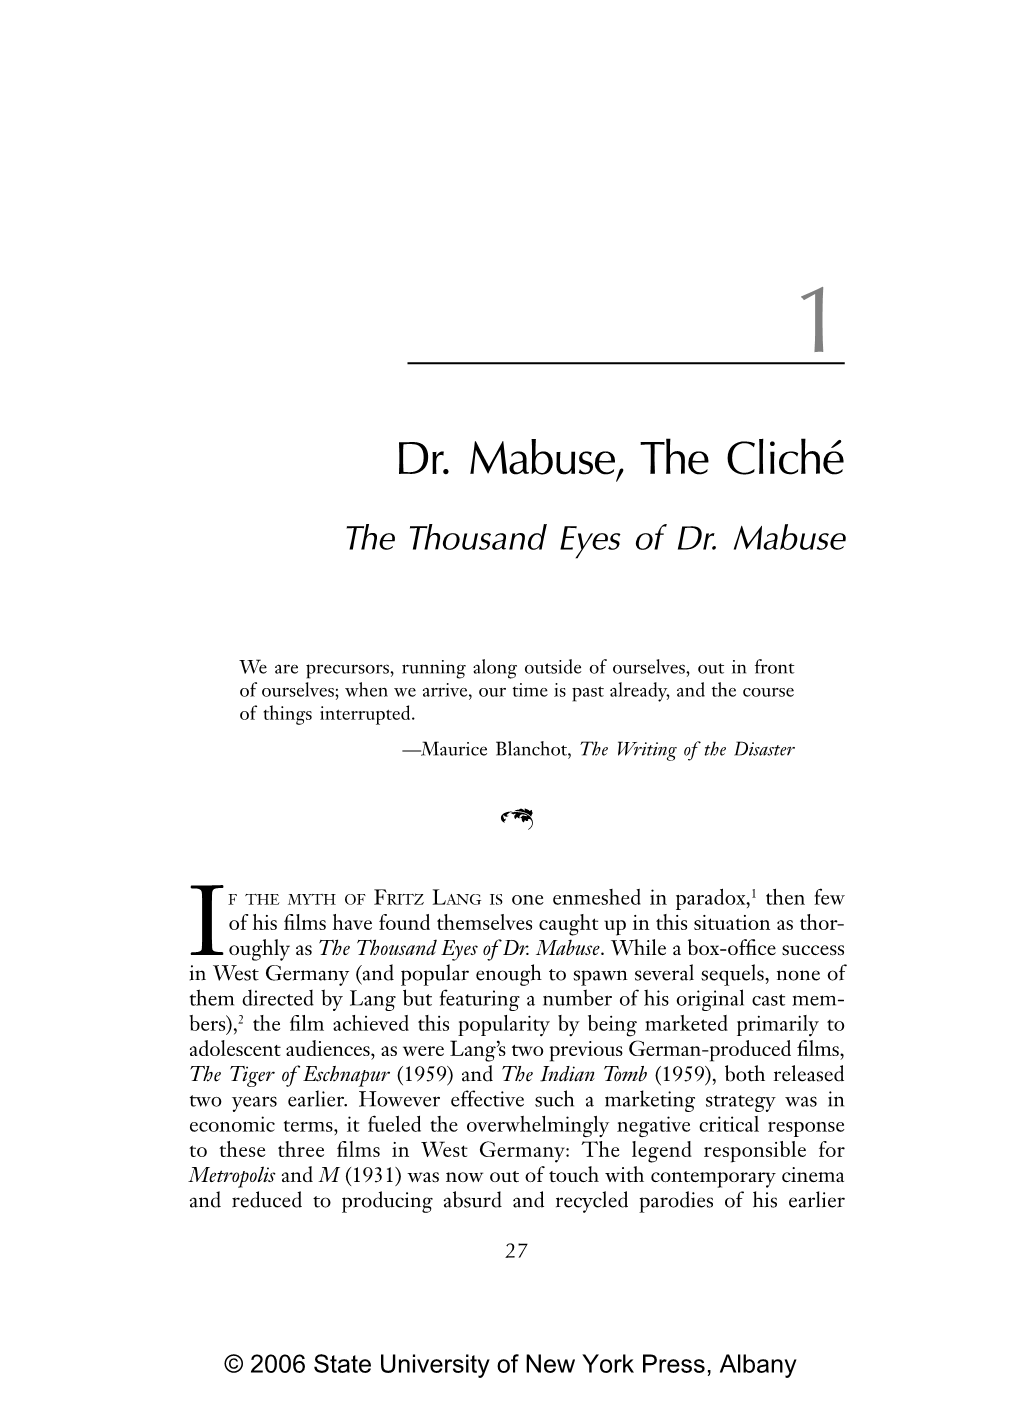 Dr. Mabuse, the Cliché